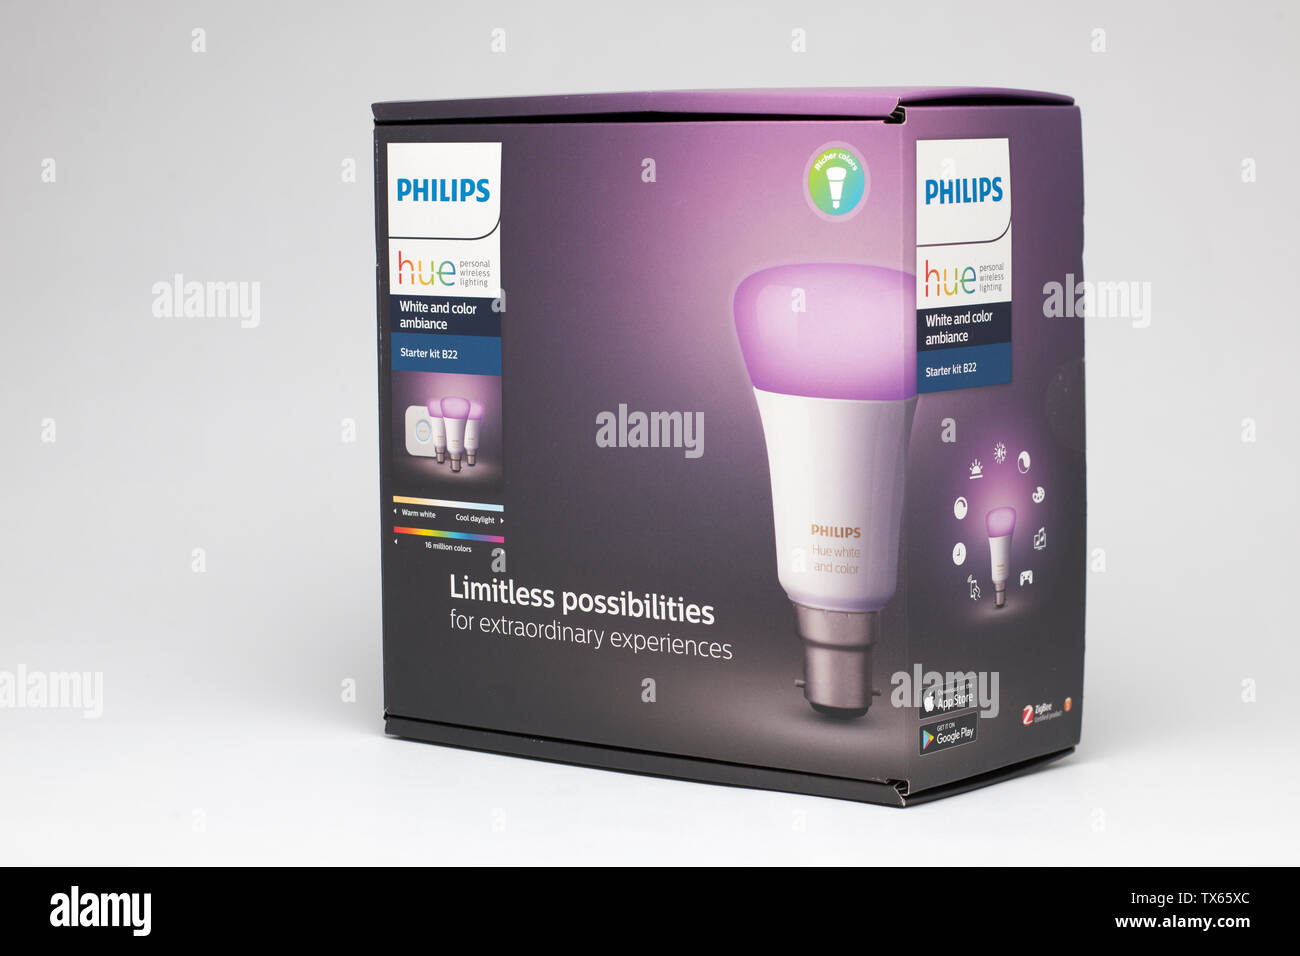 Philips Hue smart light bulbs and ambiance B22 bayonet fitting Stock Photo